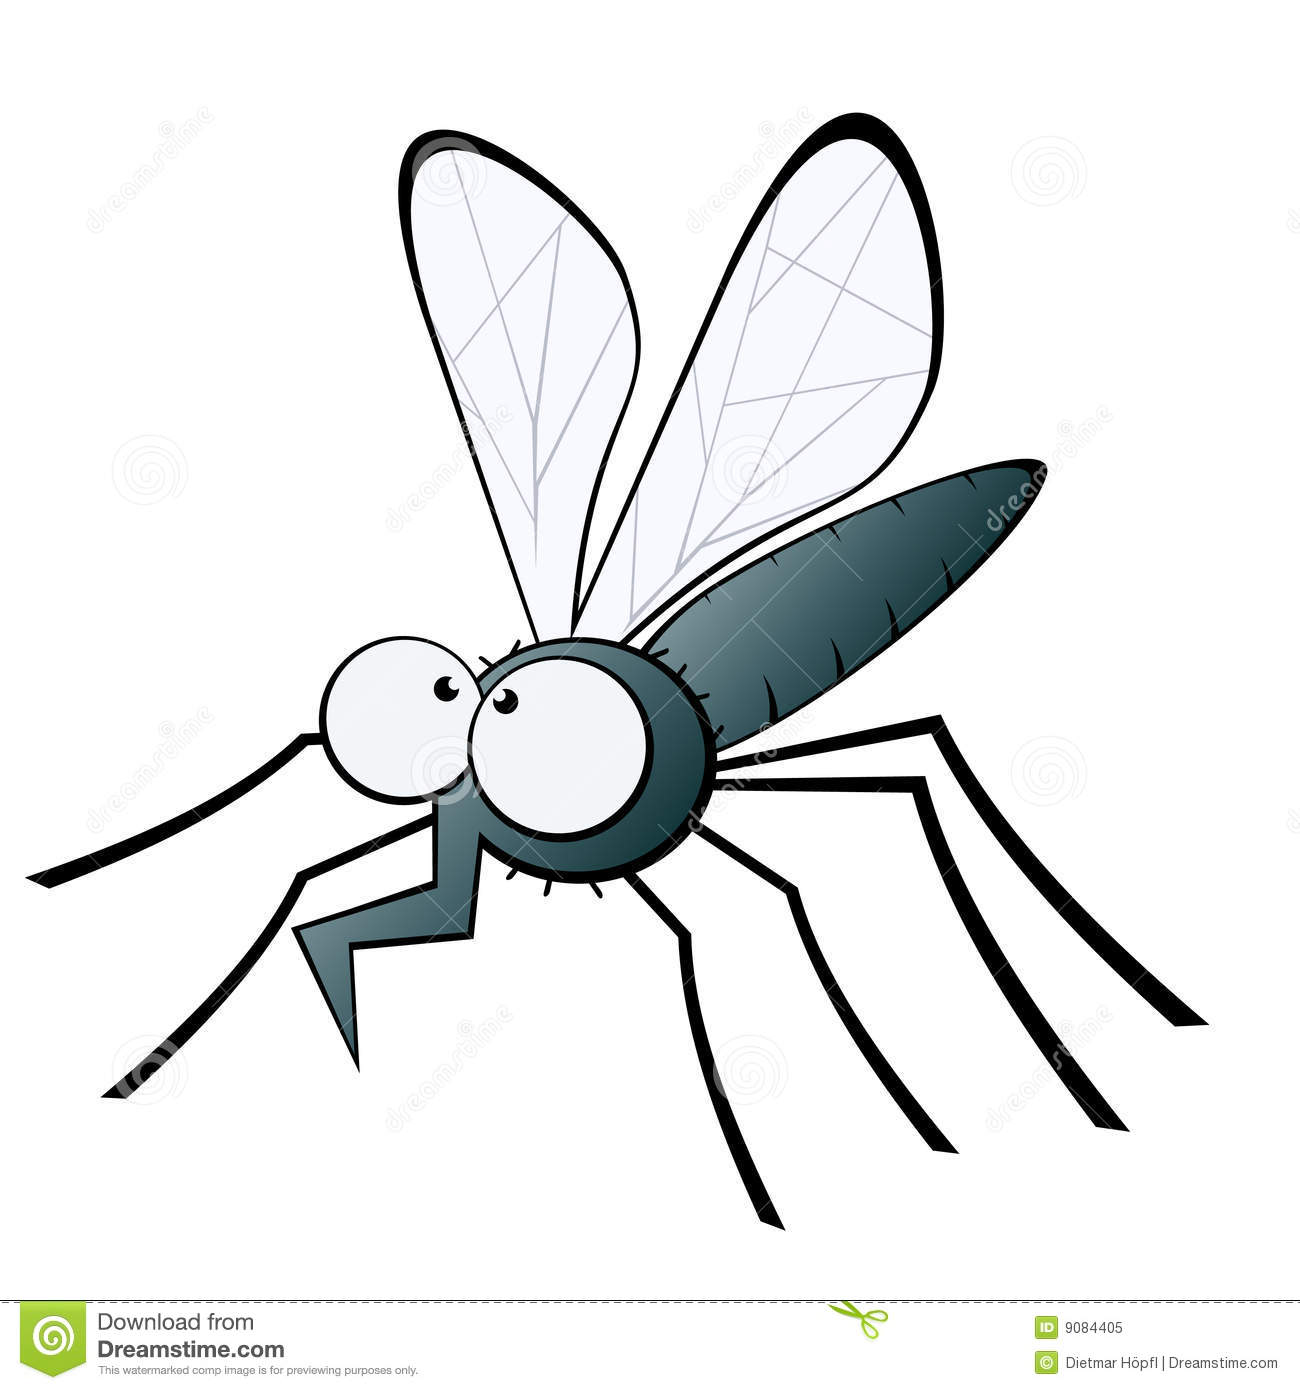 Illustrated Mosquito With Bent Proboscis On White Background